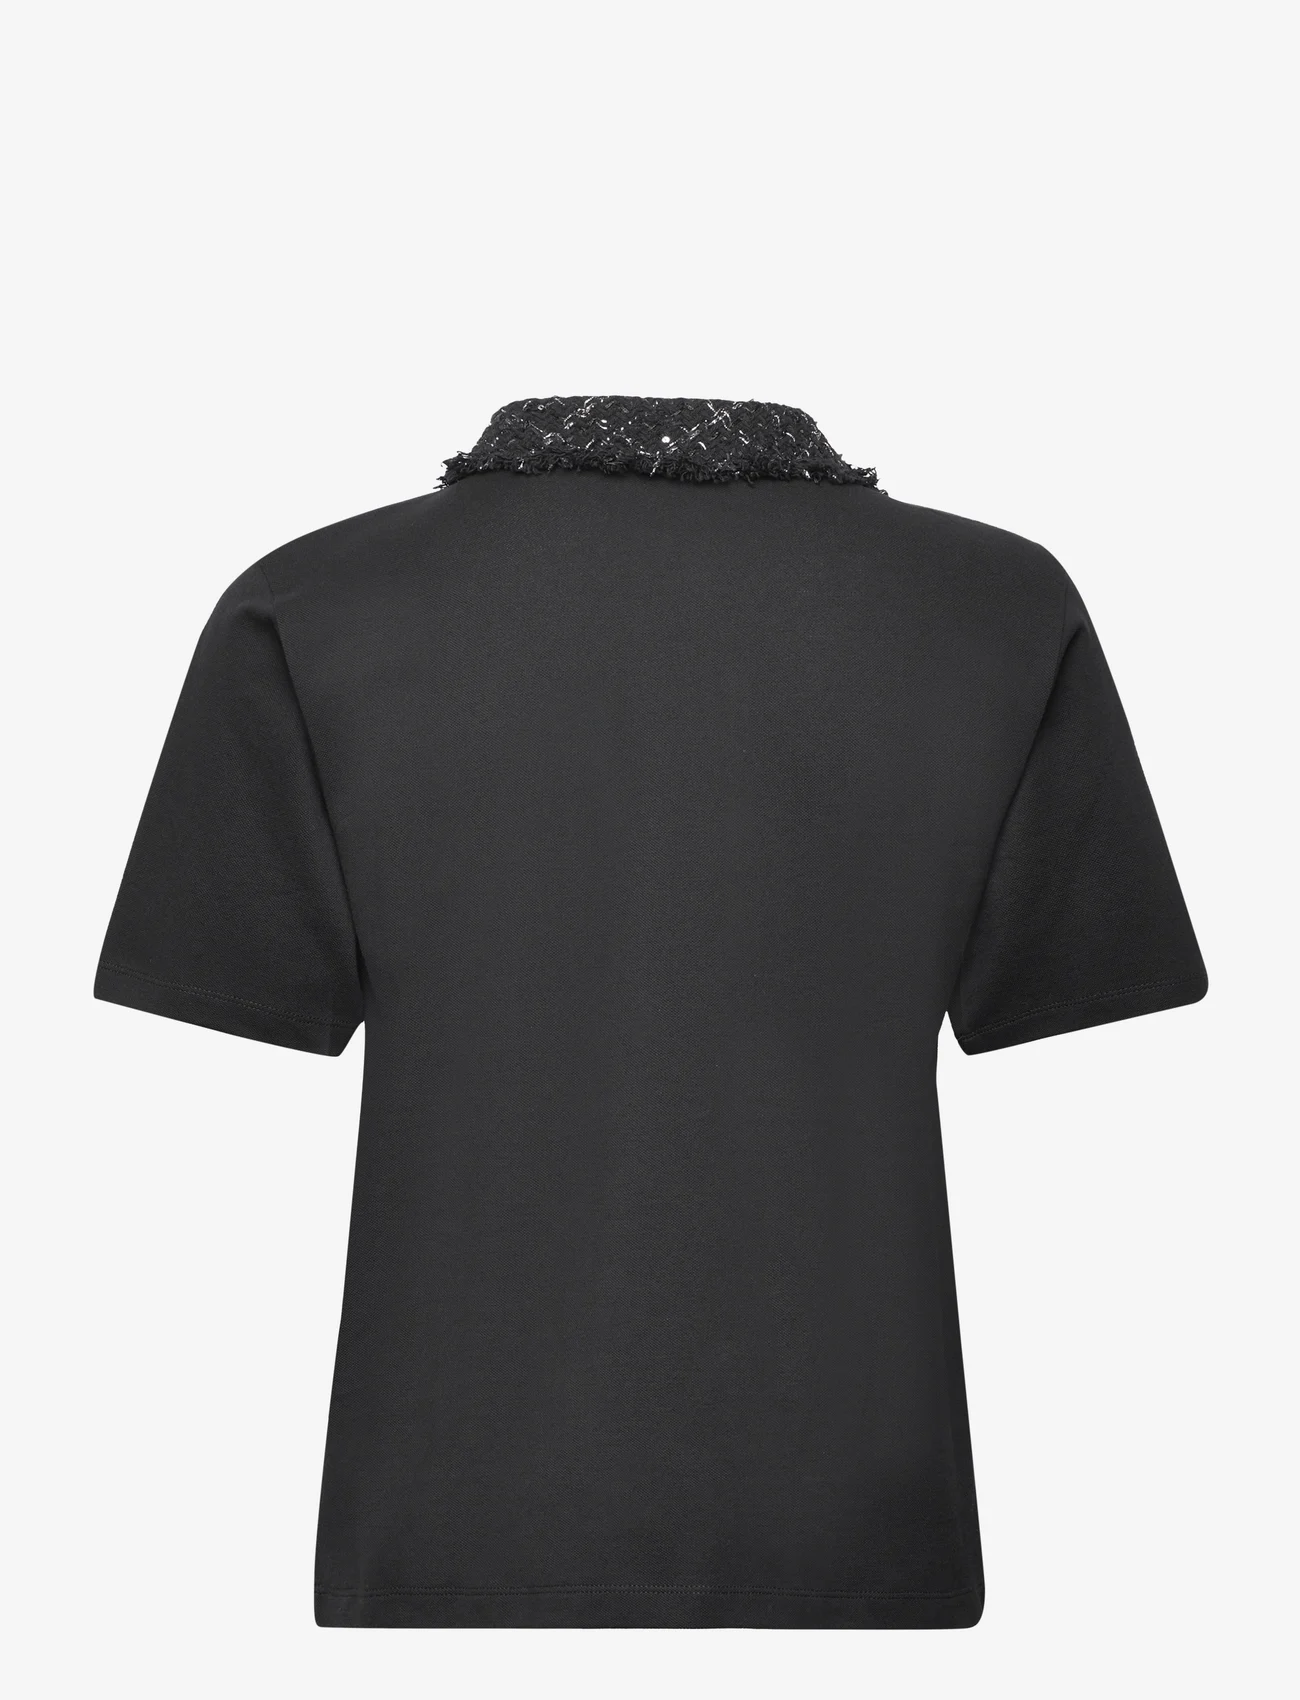 Karl Lagerfeld - boucle polo t-shirt - t-shirt & tops - black - 1